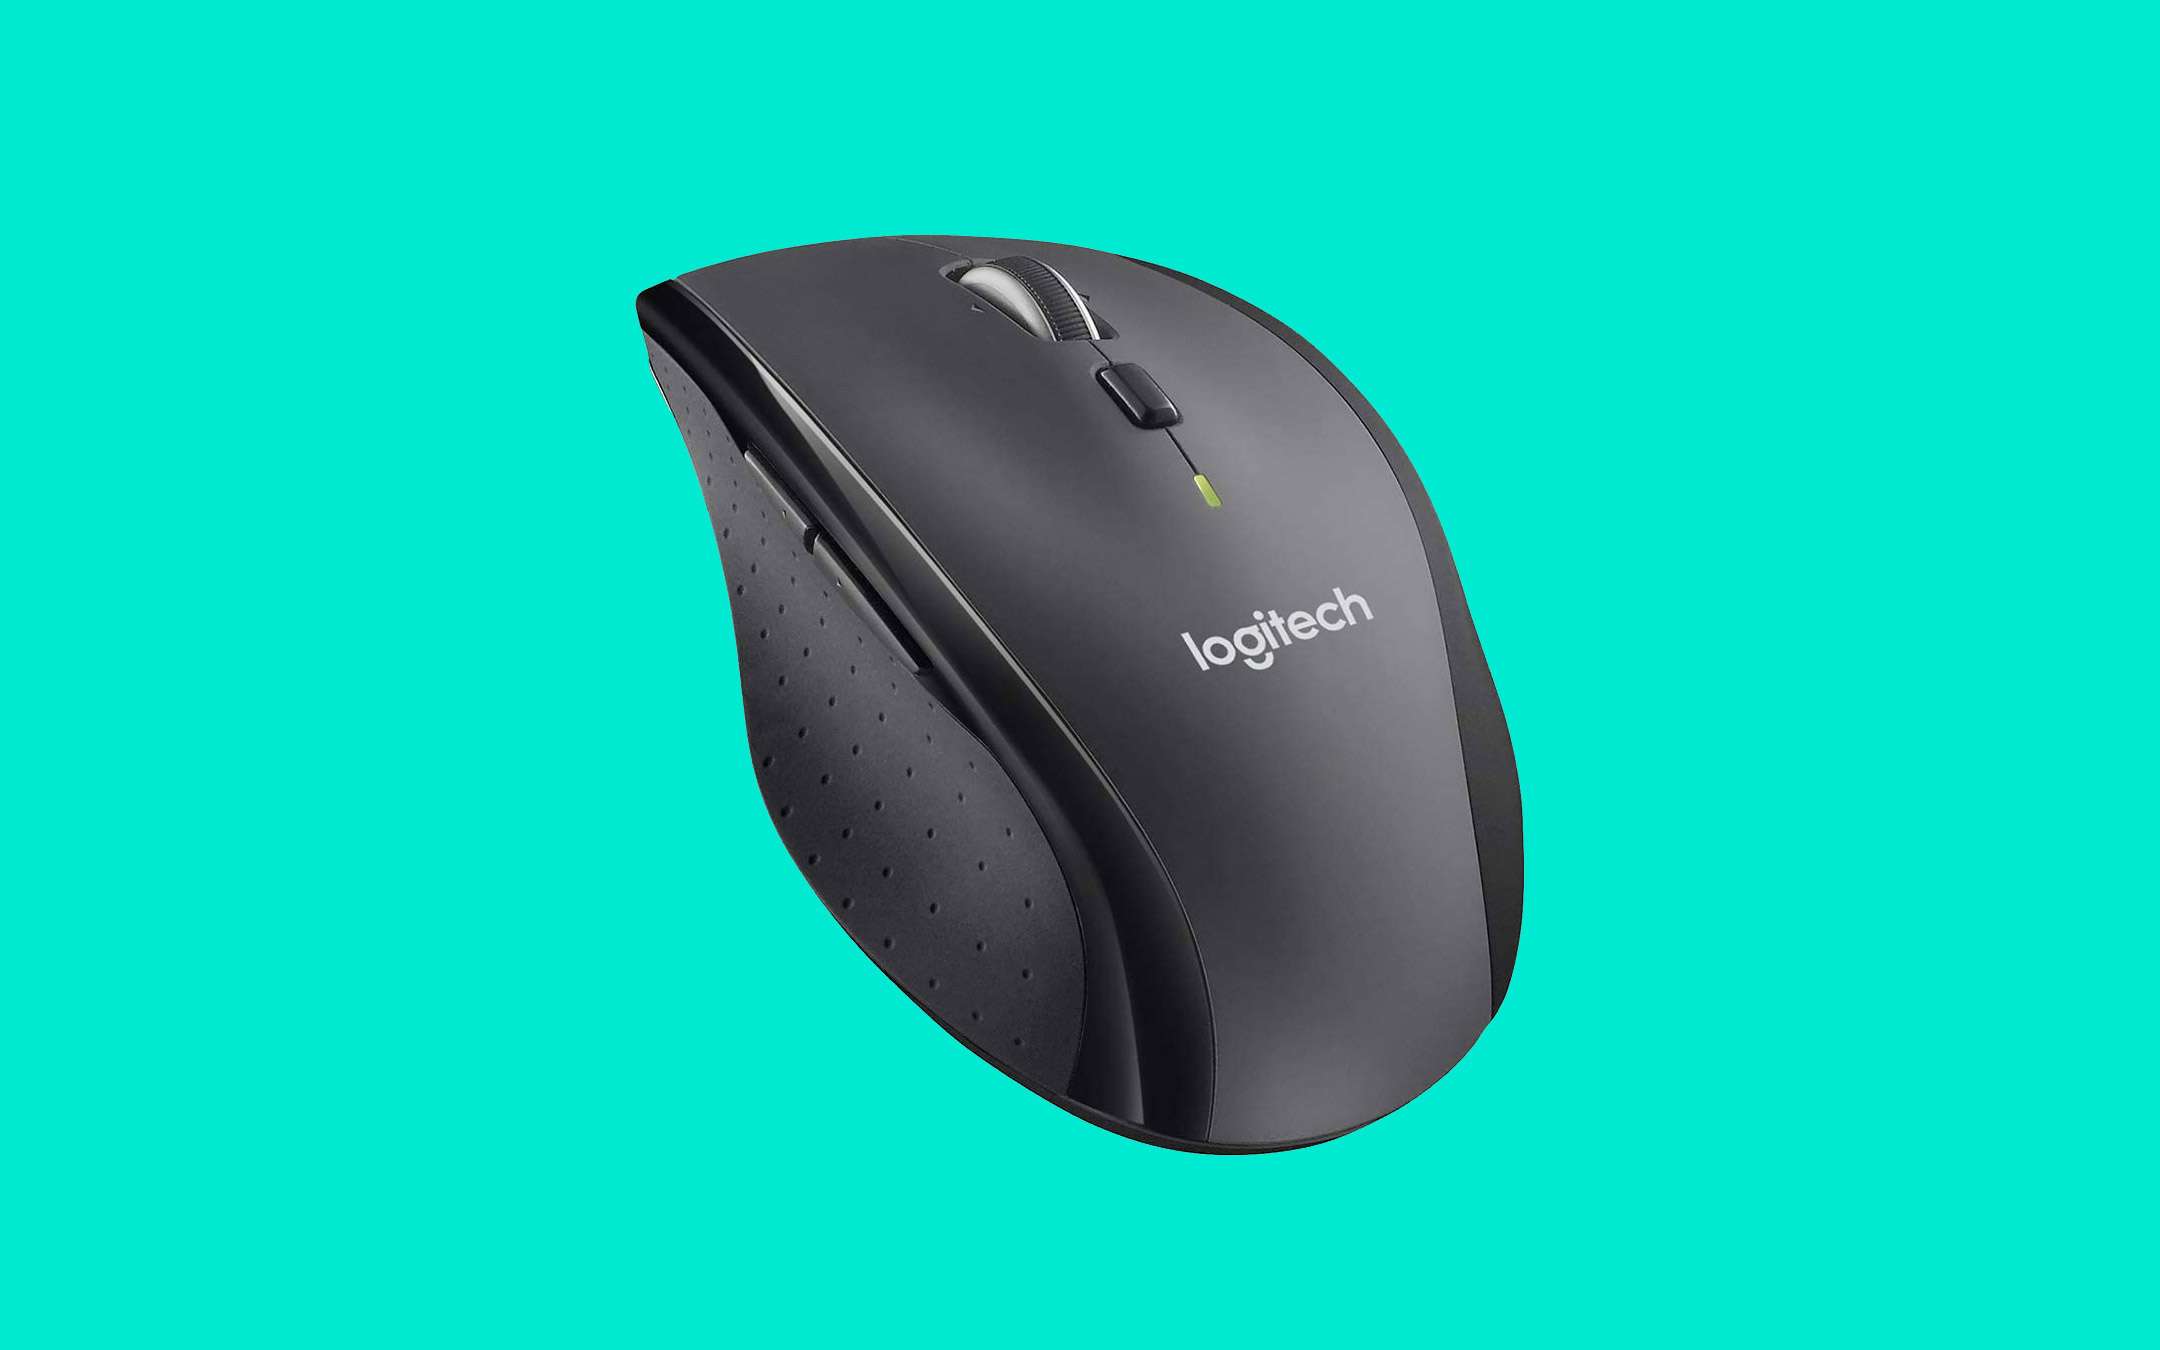 The Logitech M705 Marathon mouse at -50% on Amazon